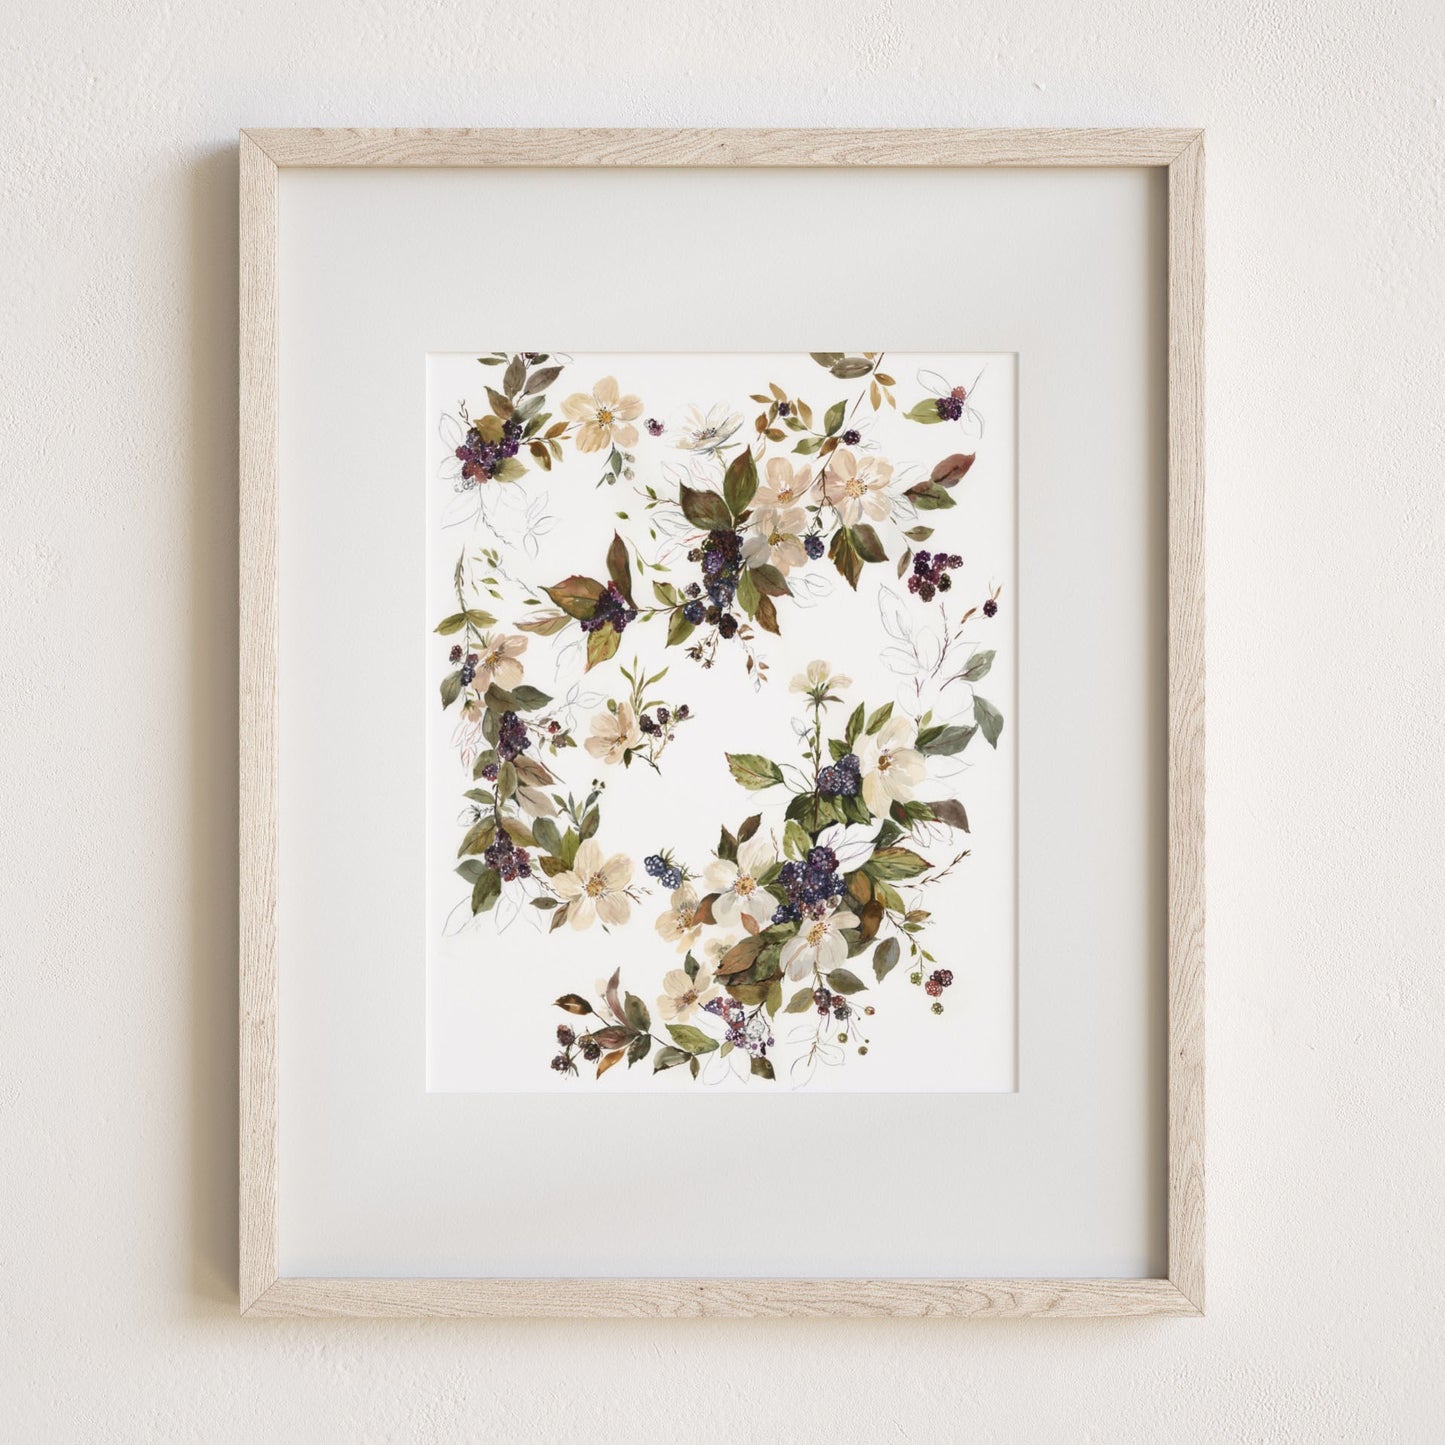 Blackberry blossoms art print,  8x10" framed with mat, portrait view